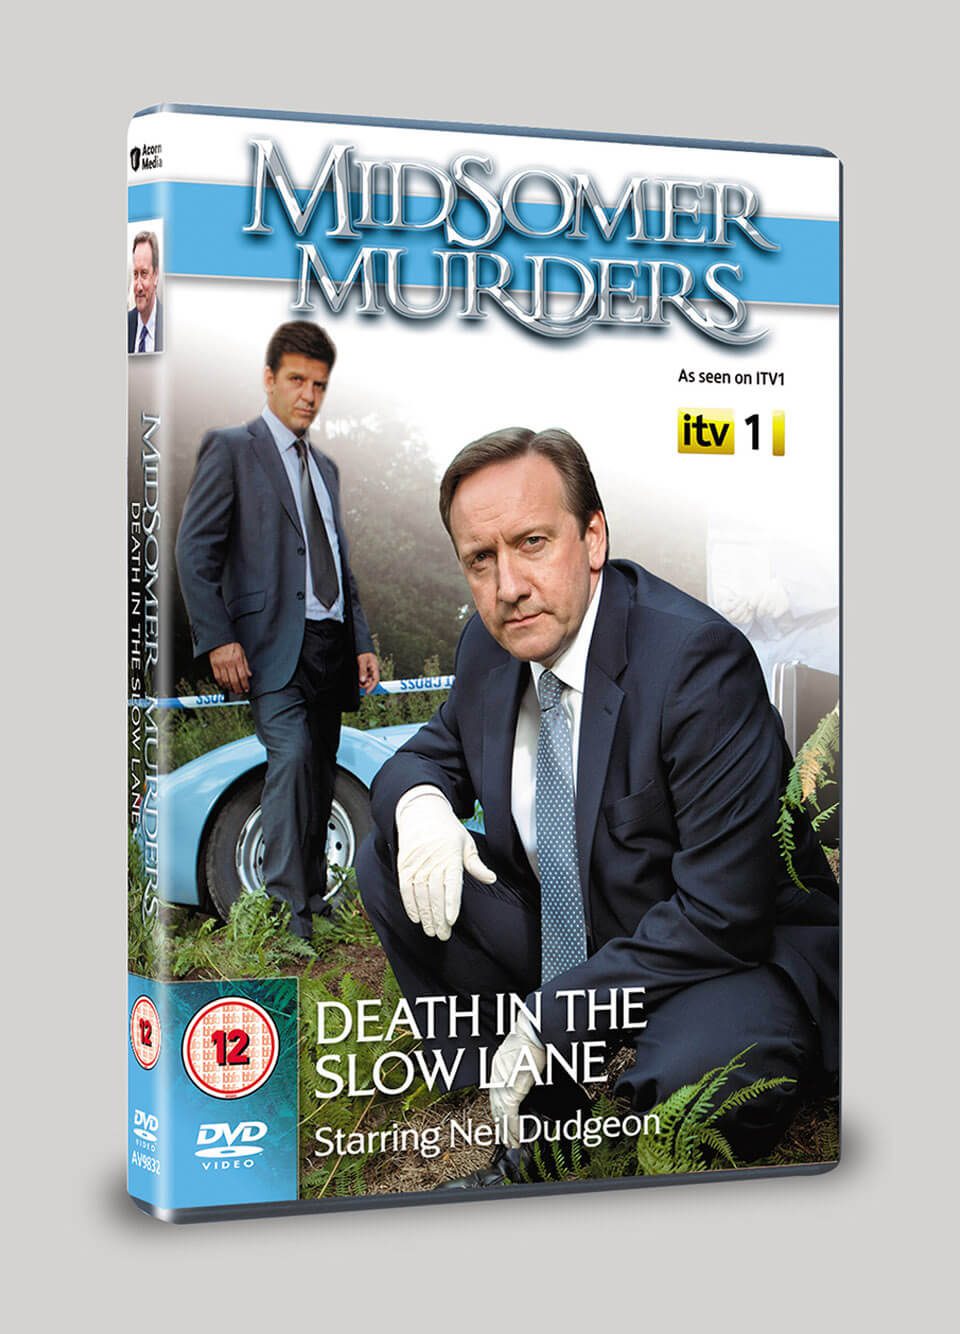 Fremantle Midsomer Murders DVD visual